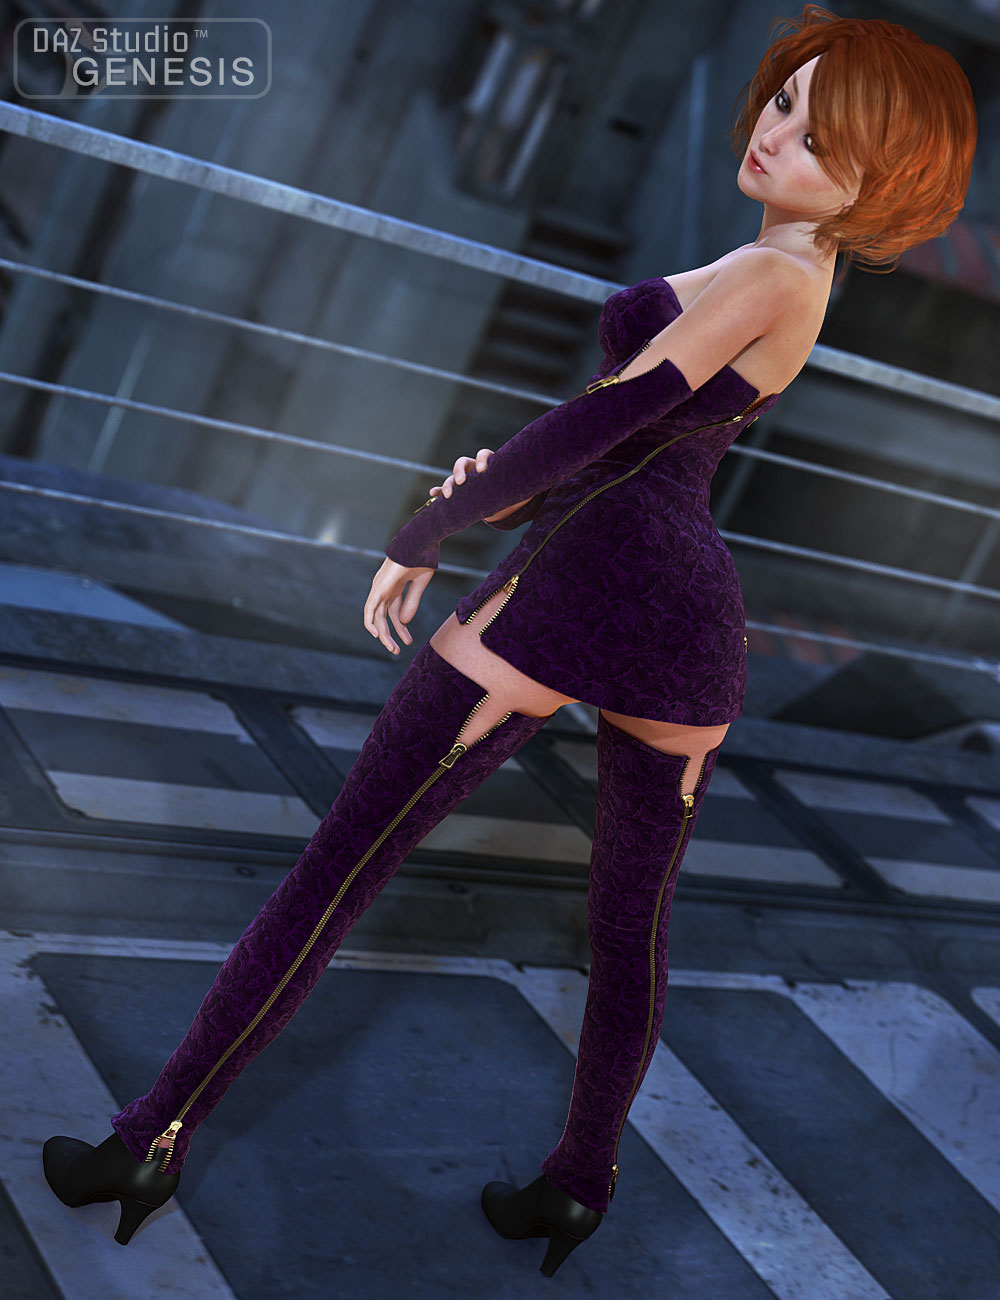 Piranha Zipper Dress by: 4blueyes, 3D Models by Daz 3D